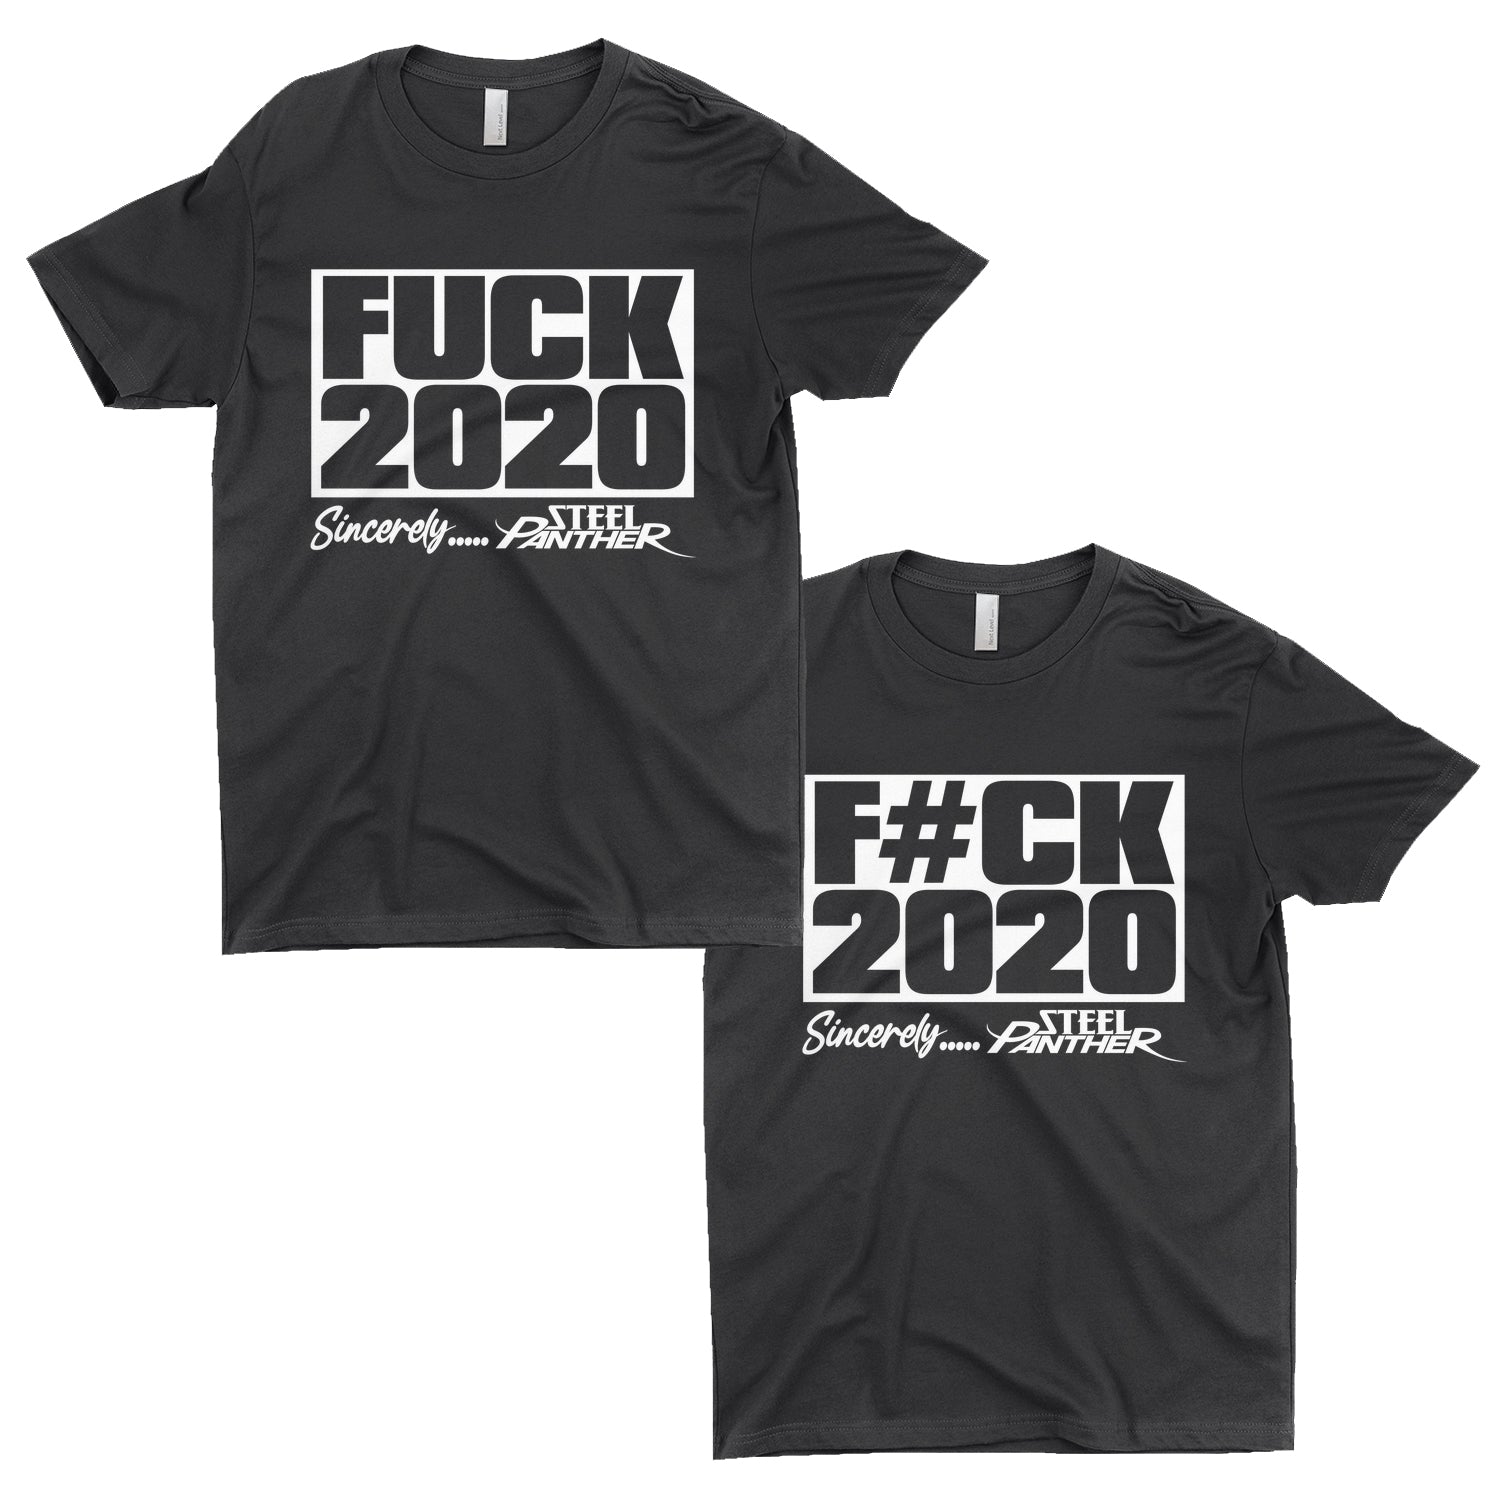 Fuck 2020 Shirts